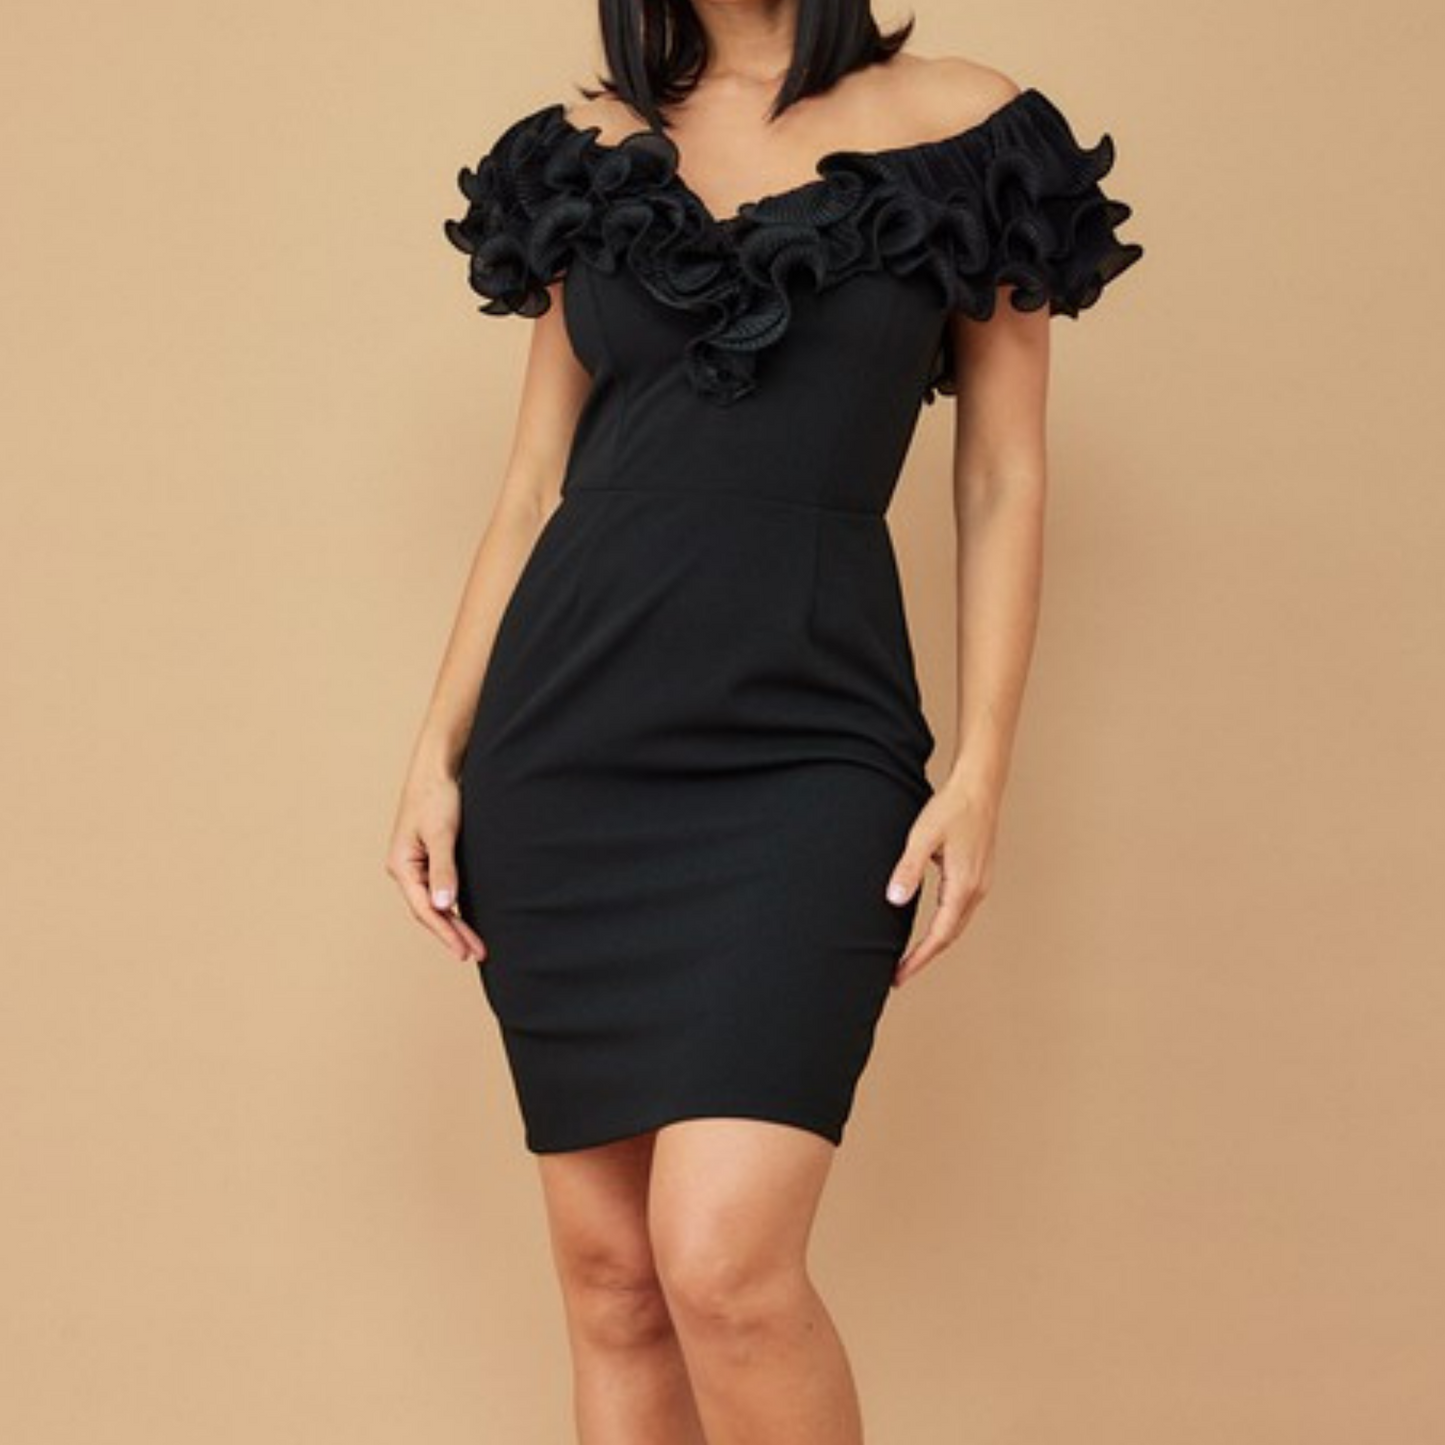 Black Ruffle Detailed Fashion Dress